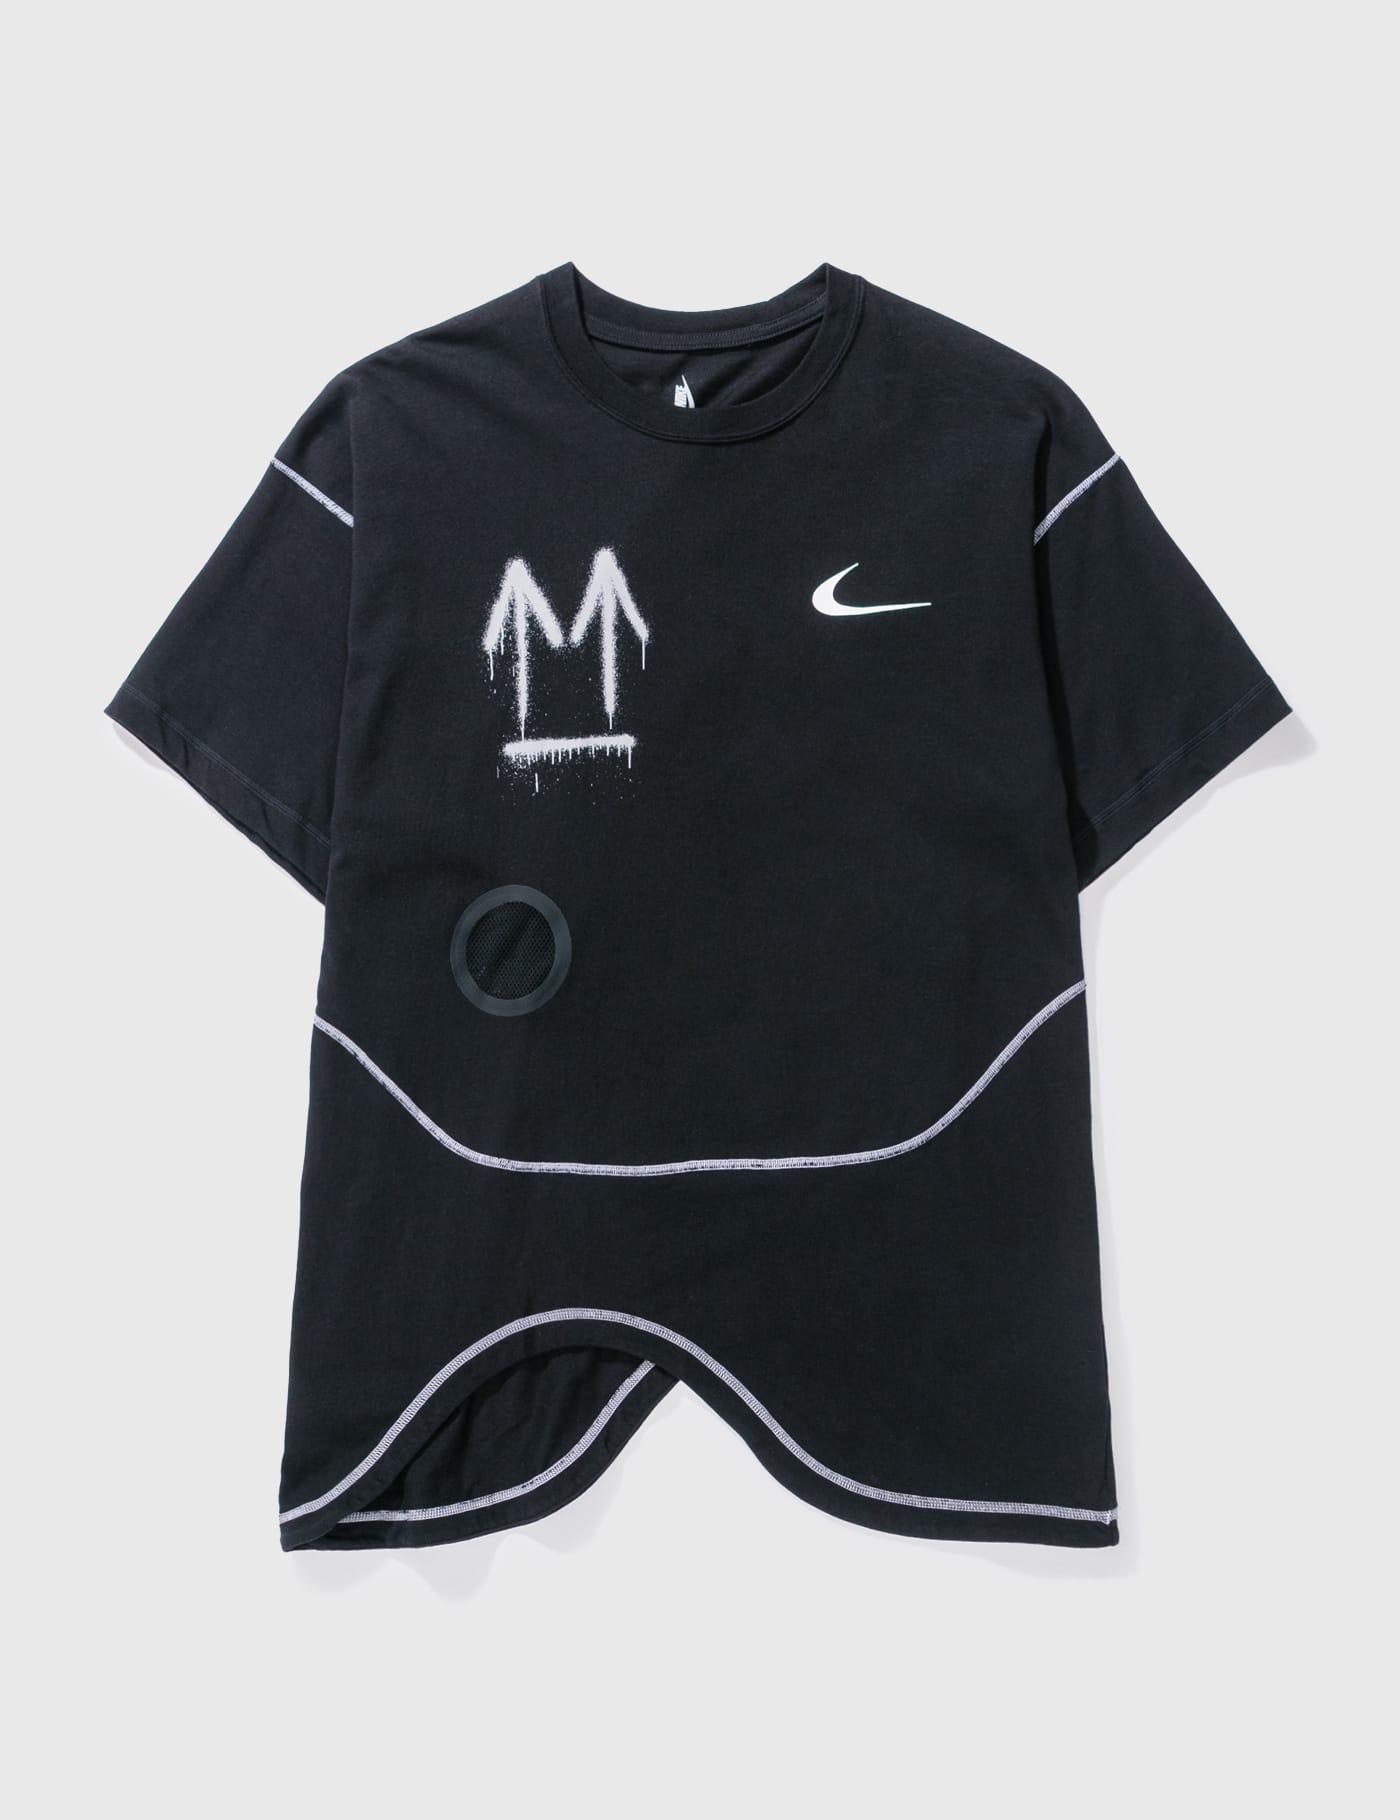 Nike off white Tシャツ   Black  nike  NIKE